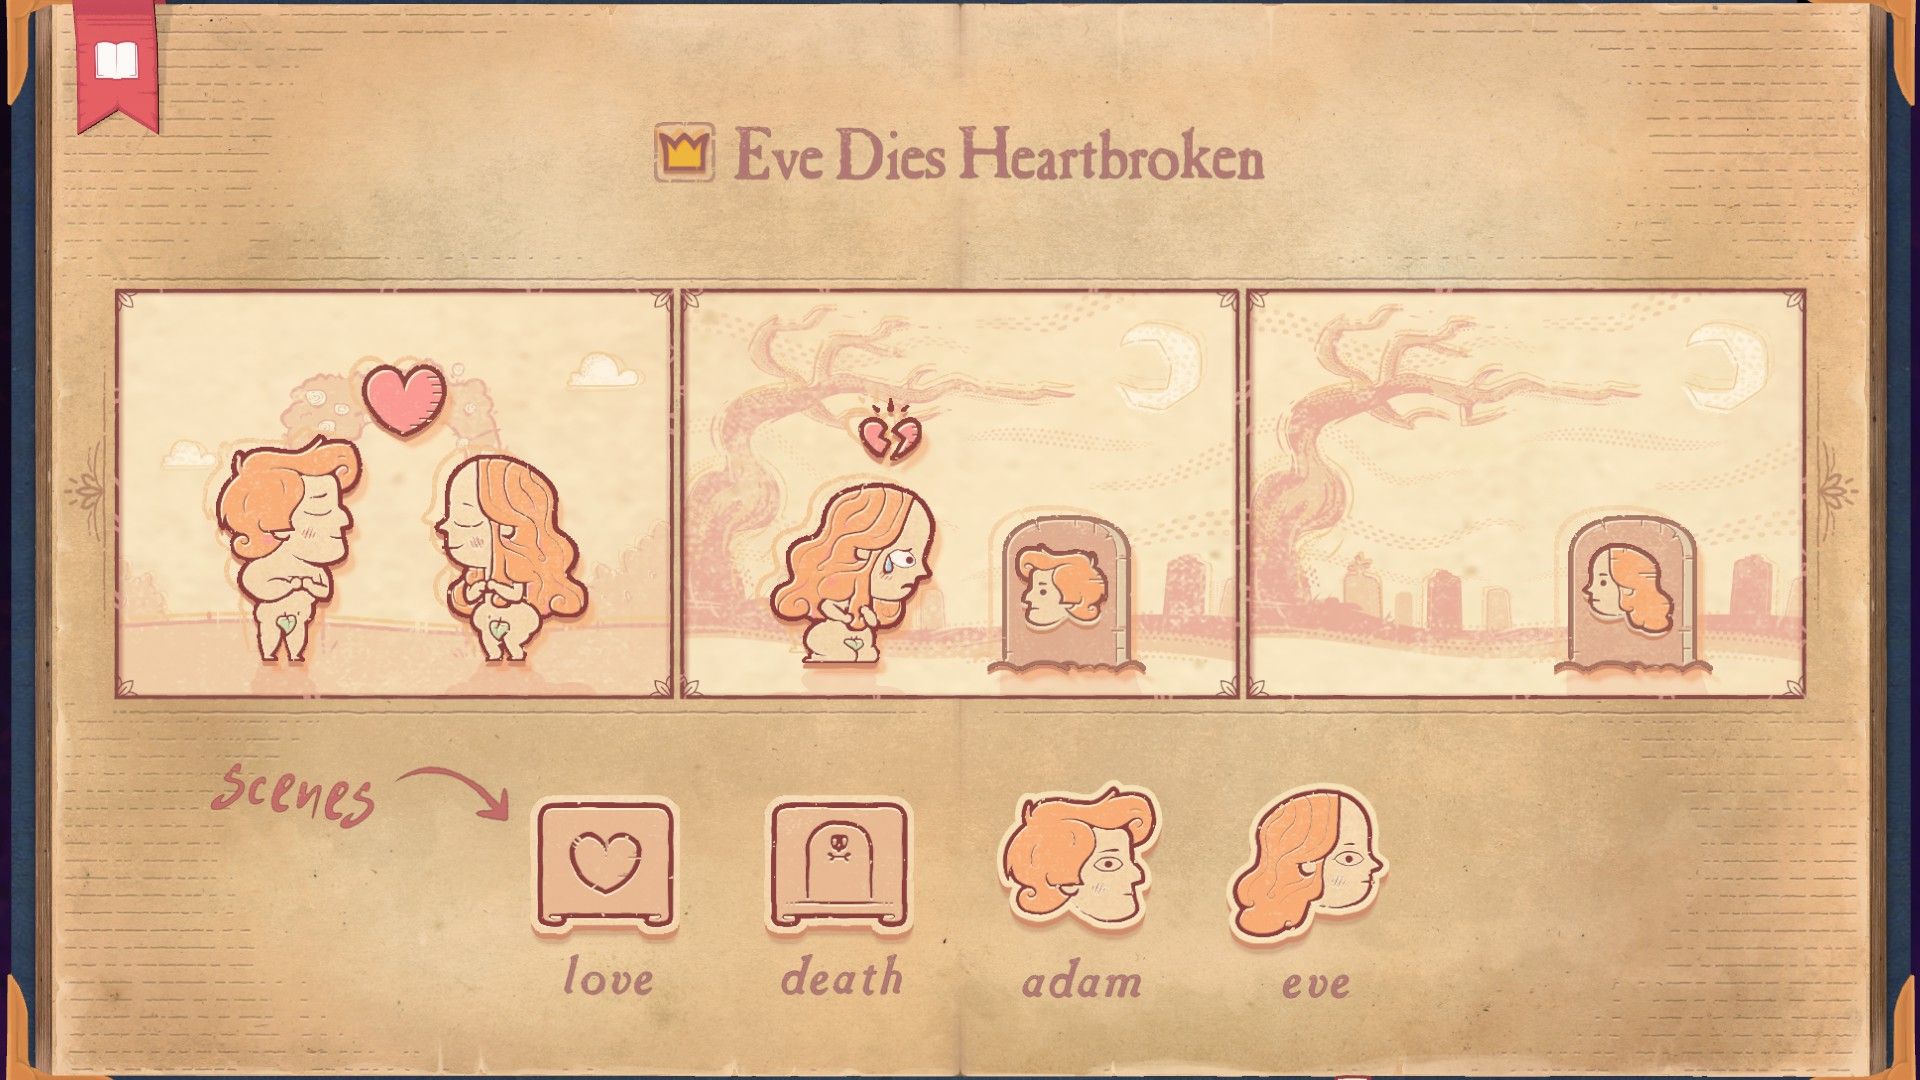 The solution for the Heartbreak section of Stoyteller, showing Eve Dies Heartbroken.